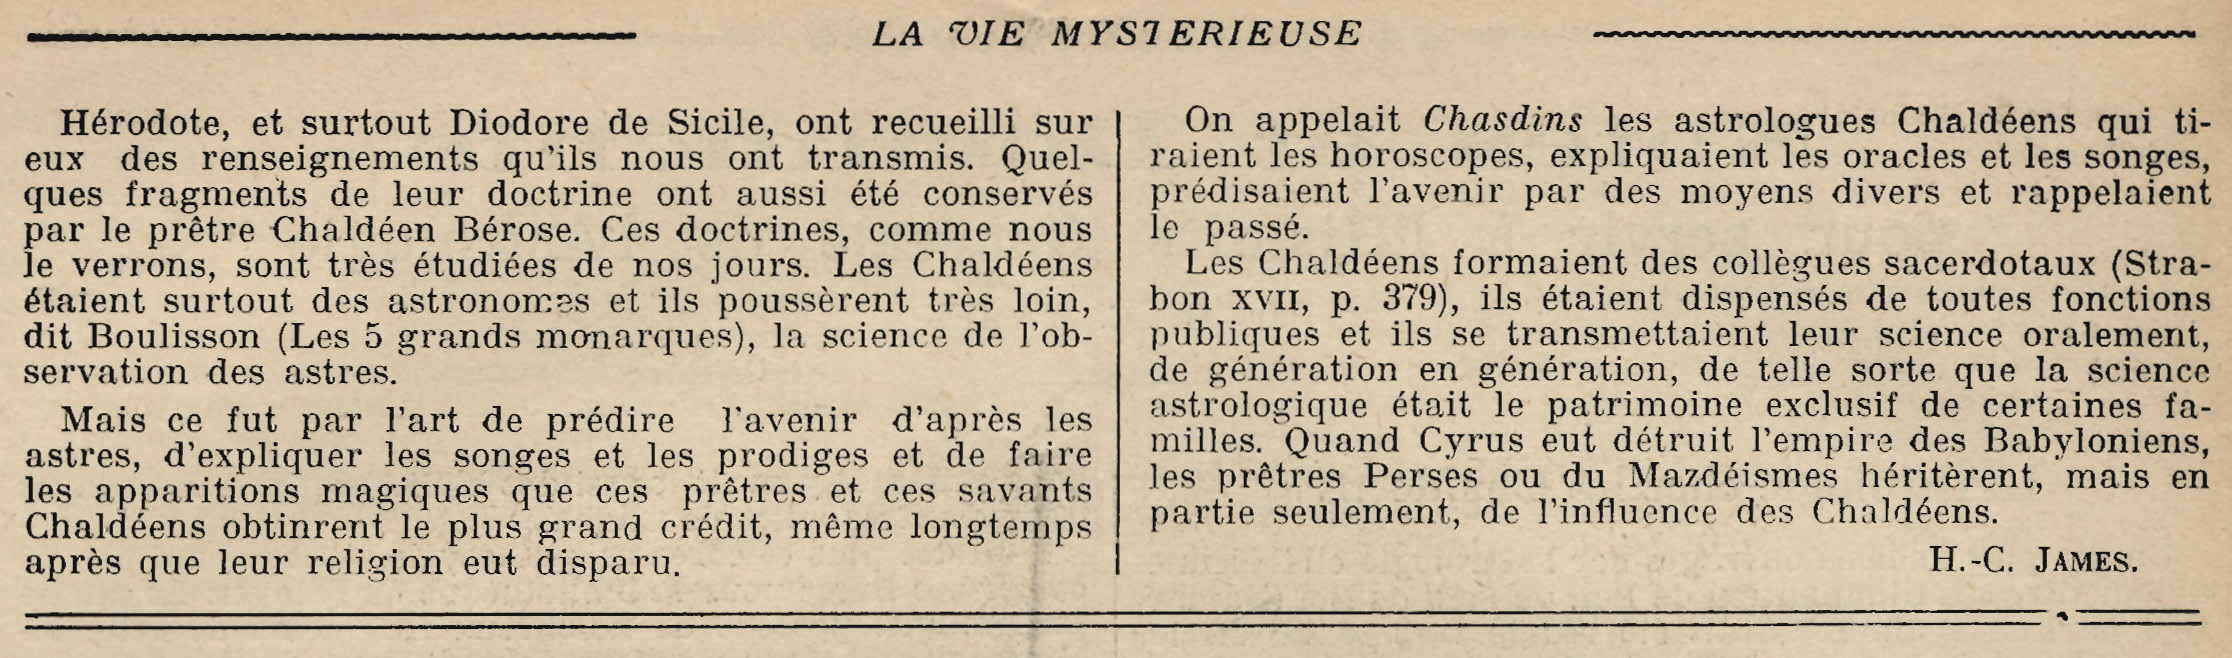 Vie Mysterieuse Histoire_Page_06